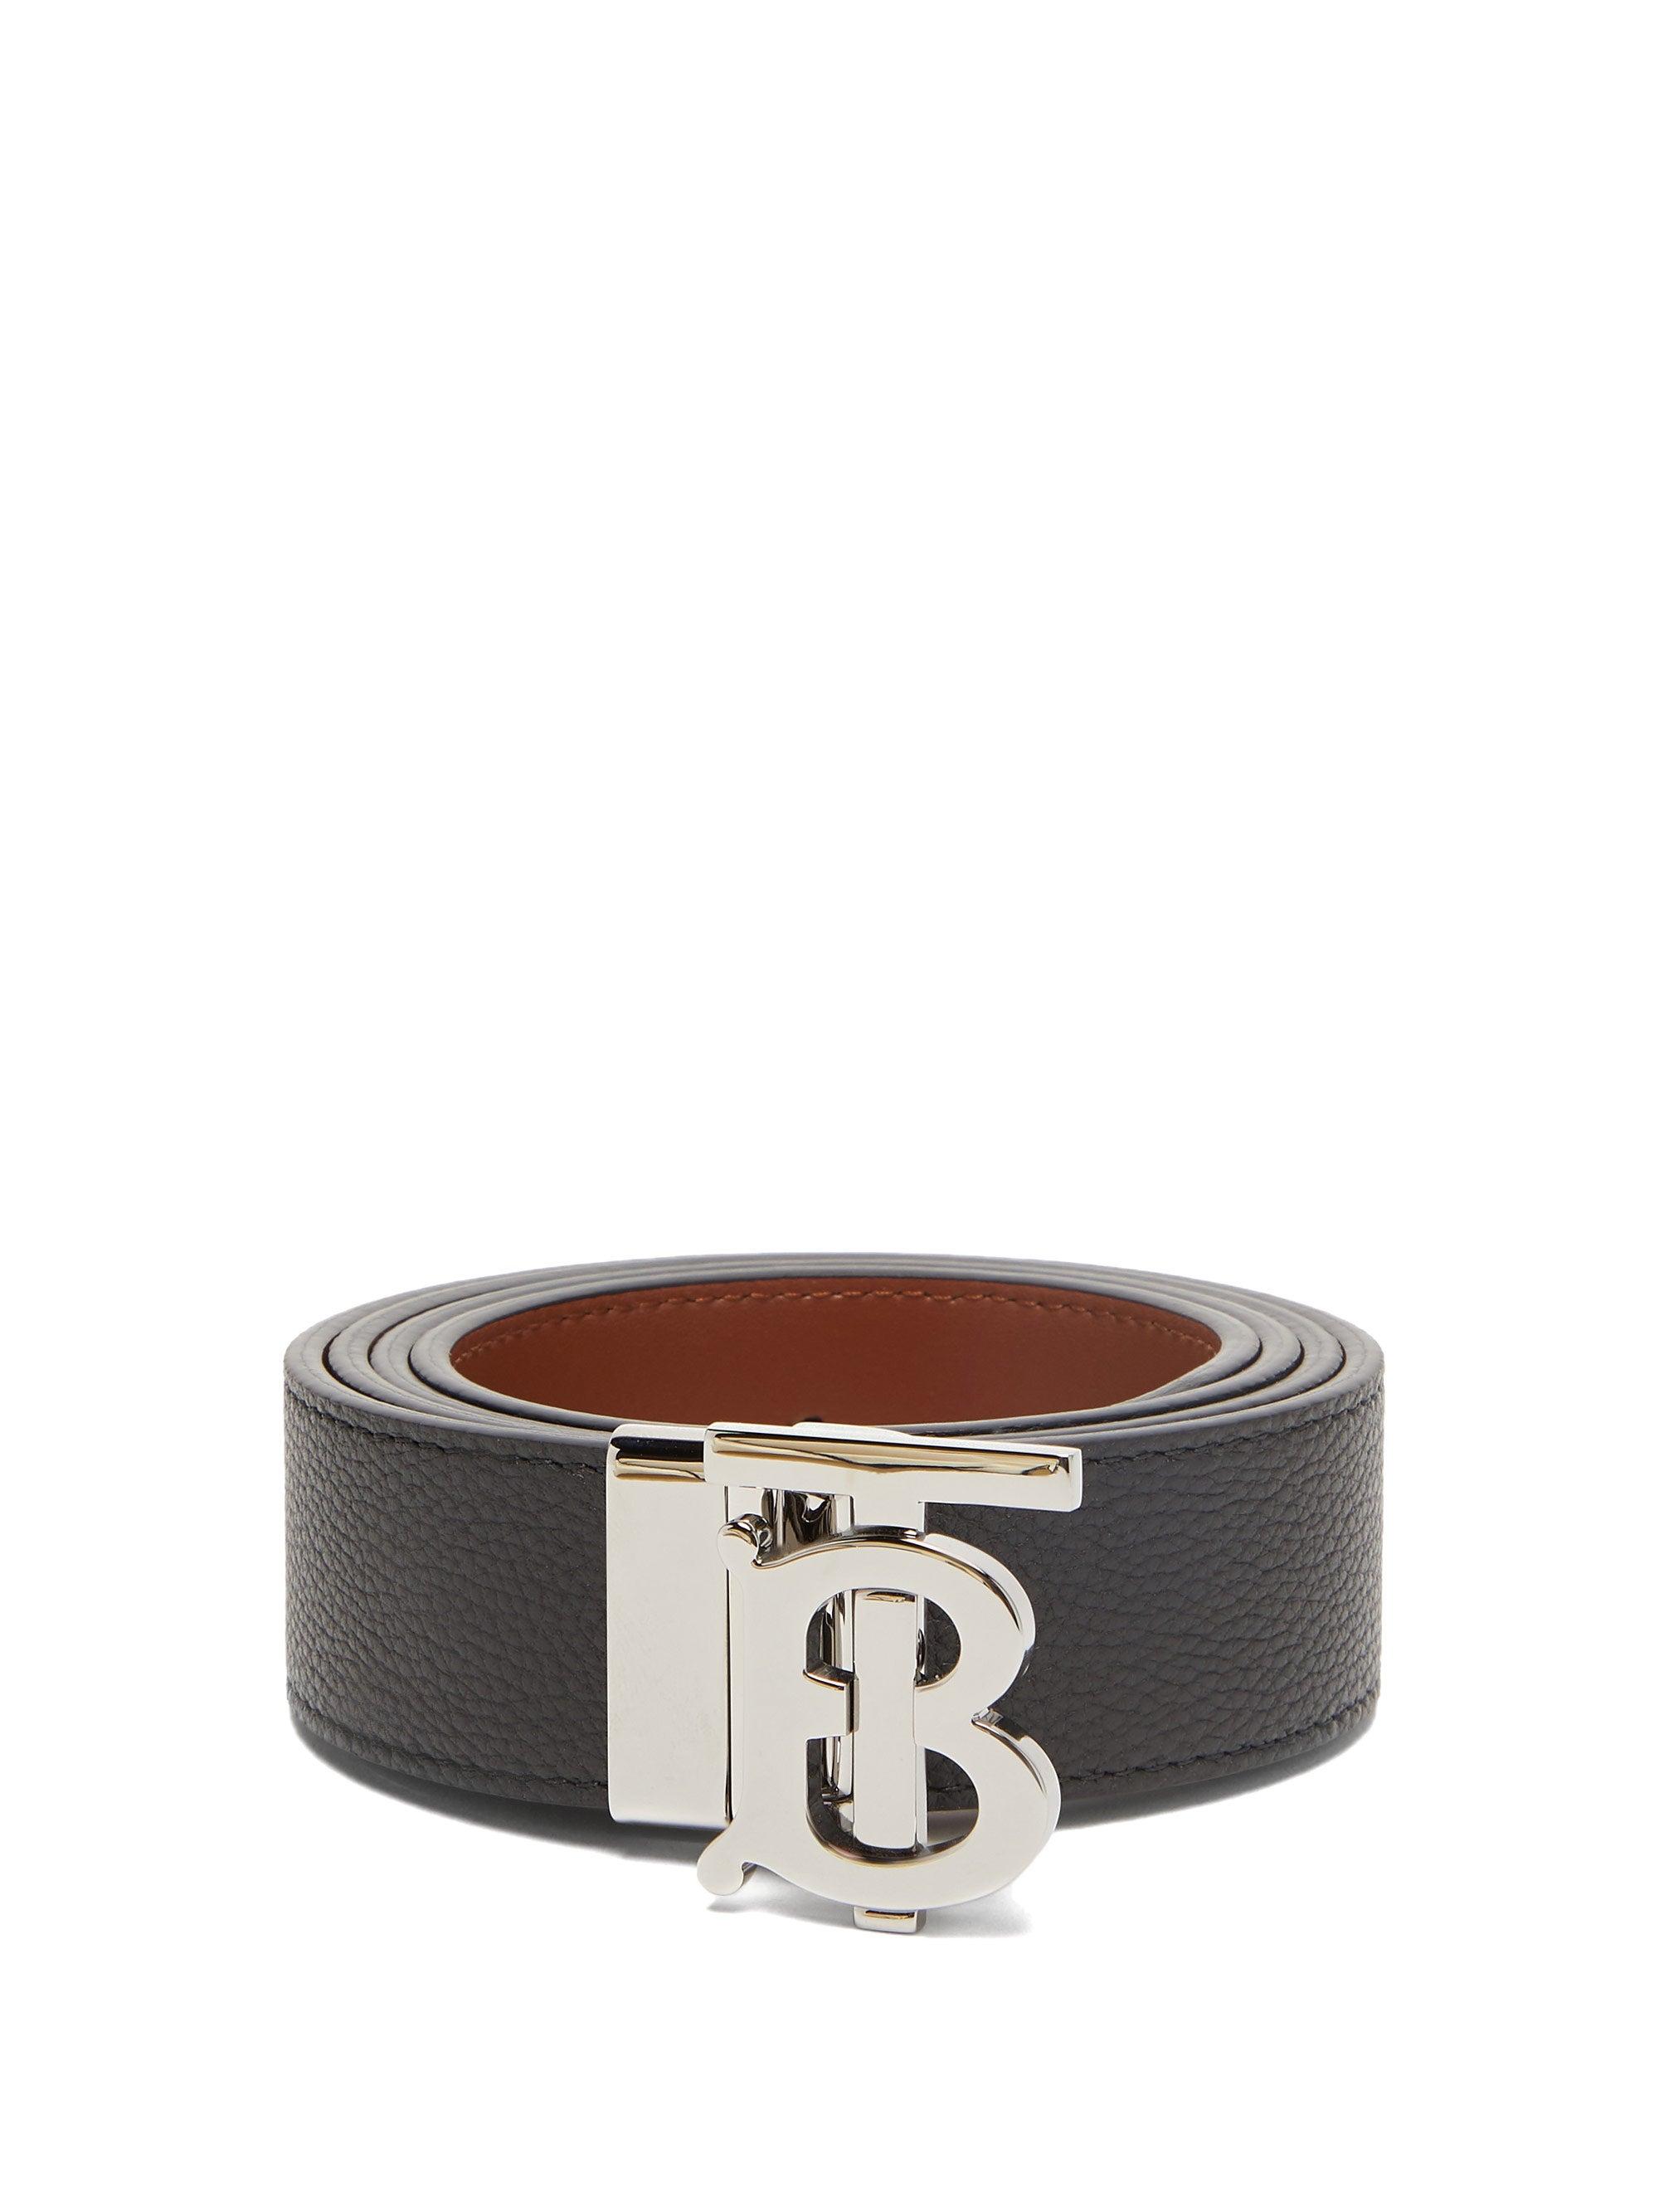 Burberry Tb-logo Leather Belt in Black for Men - Lyst